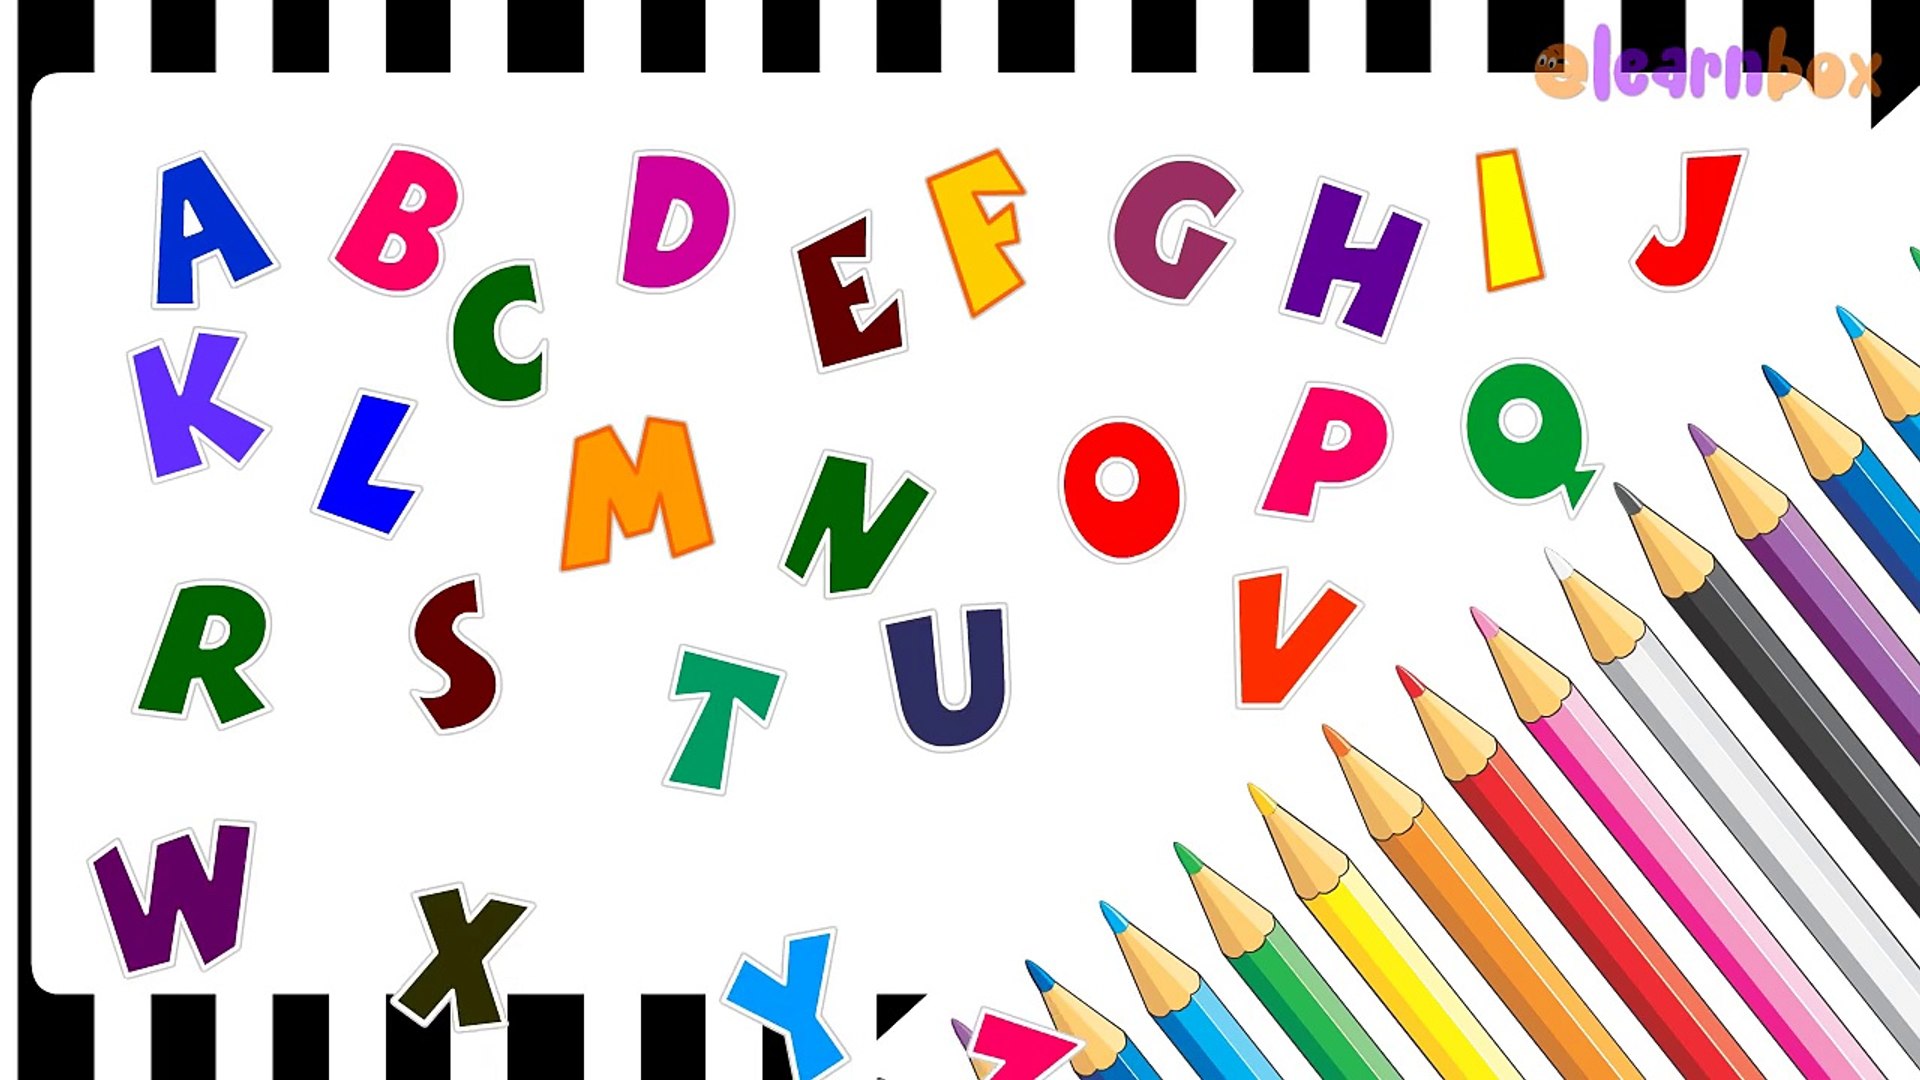 abcdefghijklmnopqrstuvwxyz song - abc songs for children - nursery rhymes songs in english